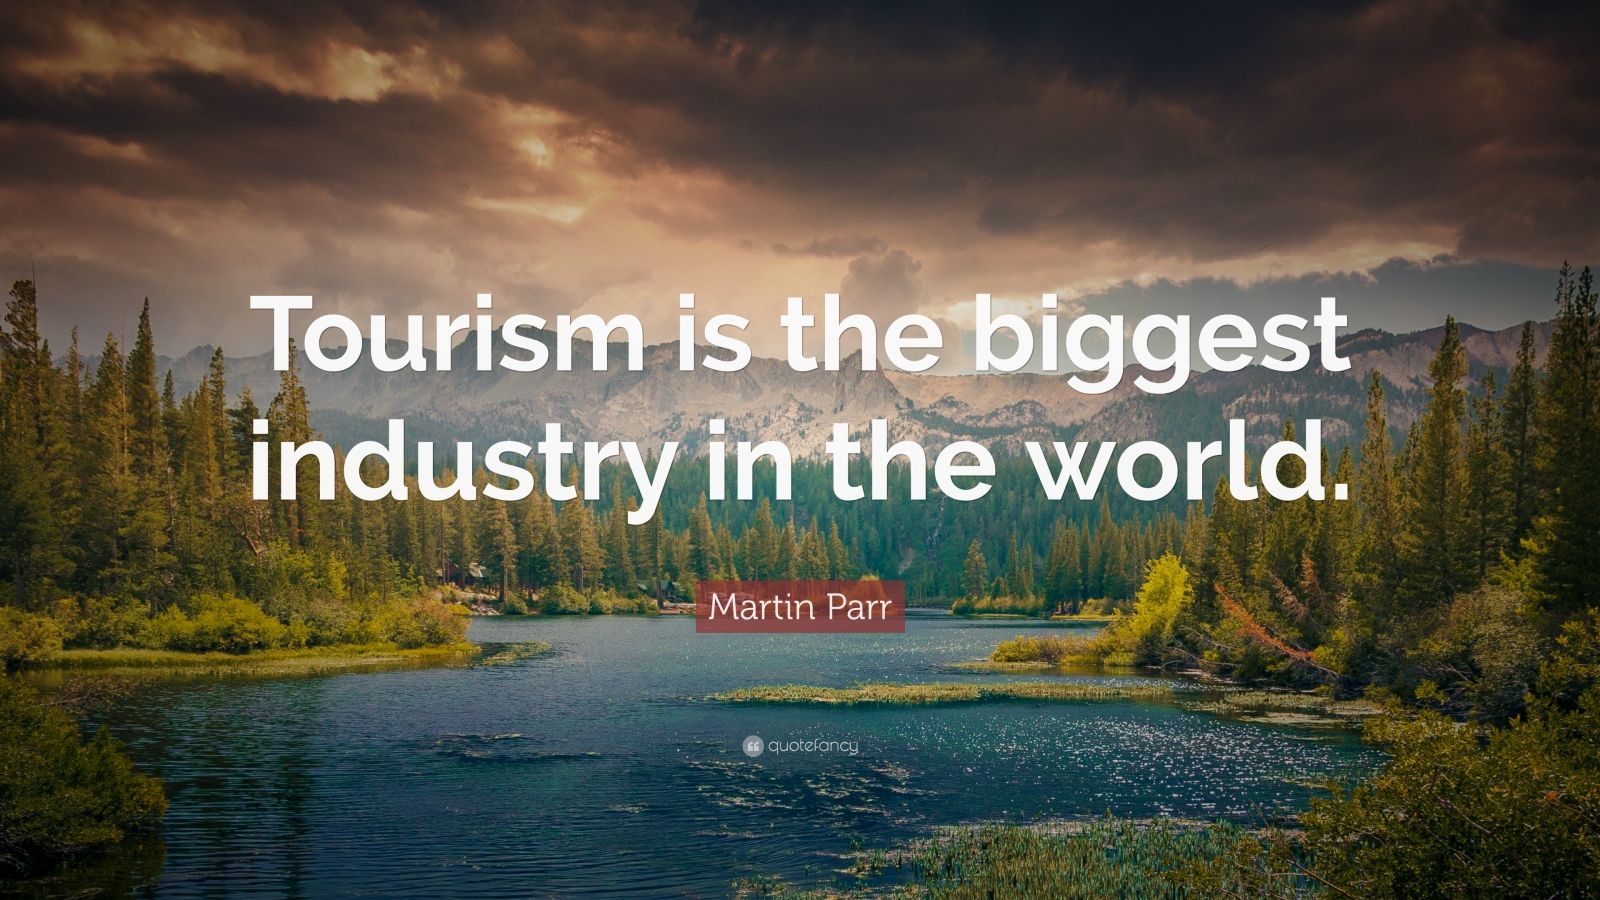 famous quotes about tourism